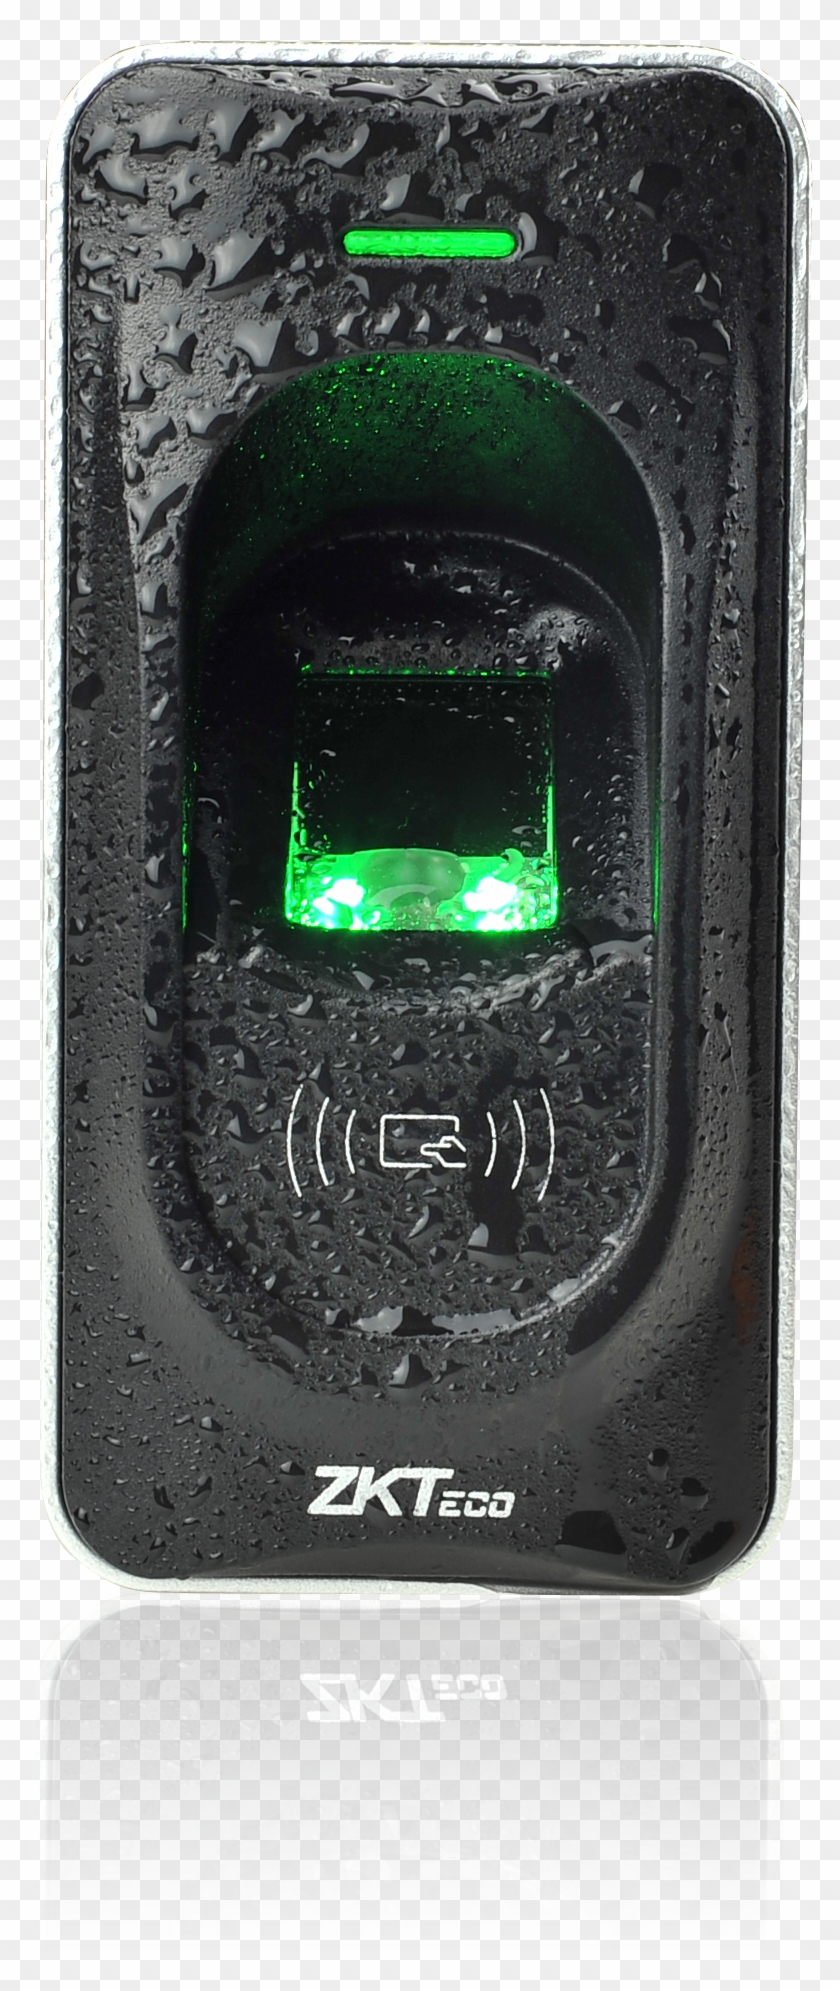 Fr1200 Fingerprint Rf Card Reader With Biometric Access - Zk Fr1200 Clipart #1614780